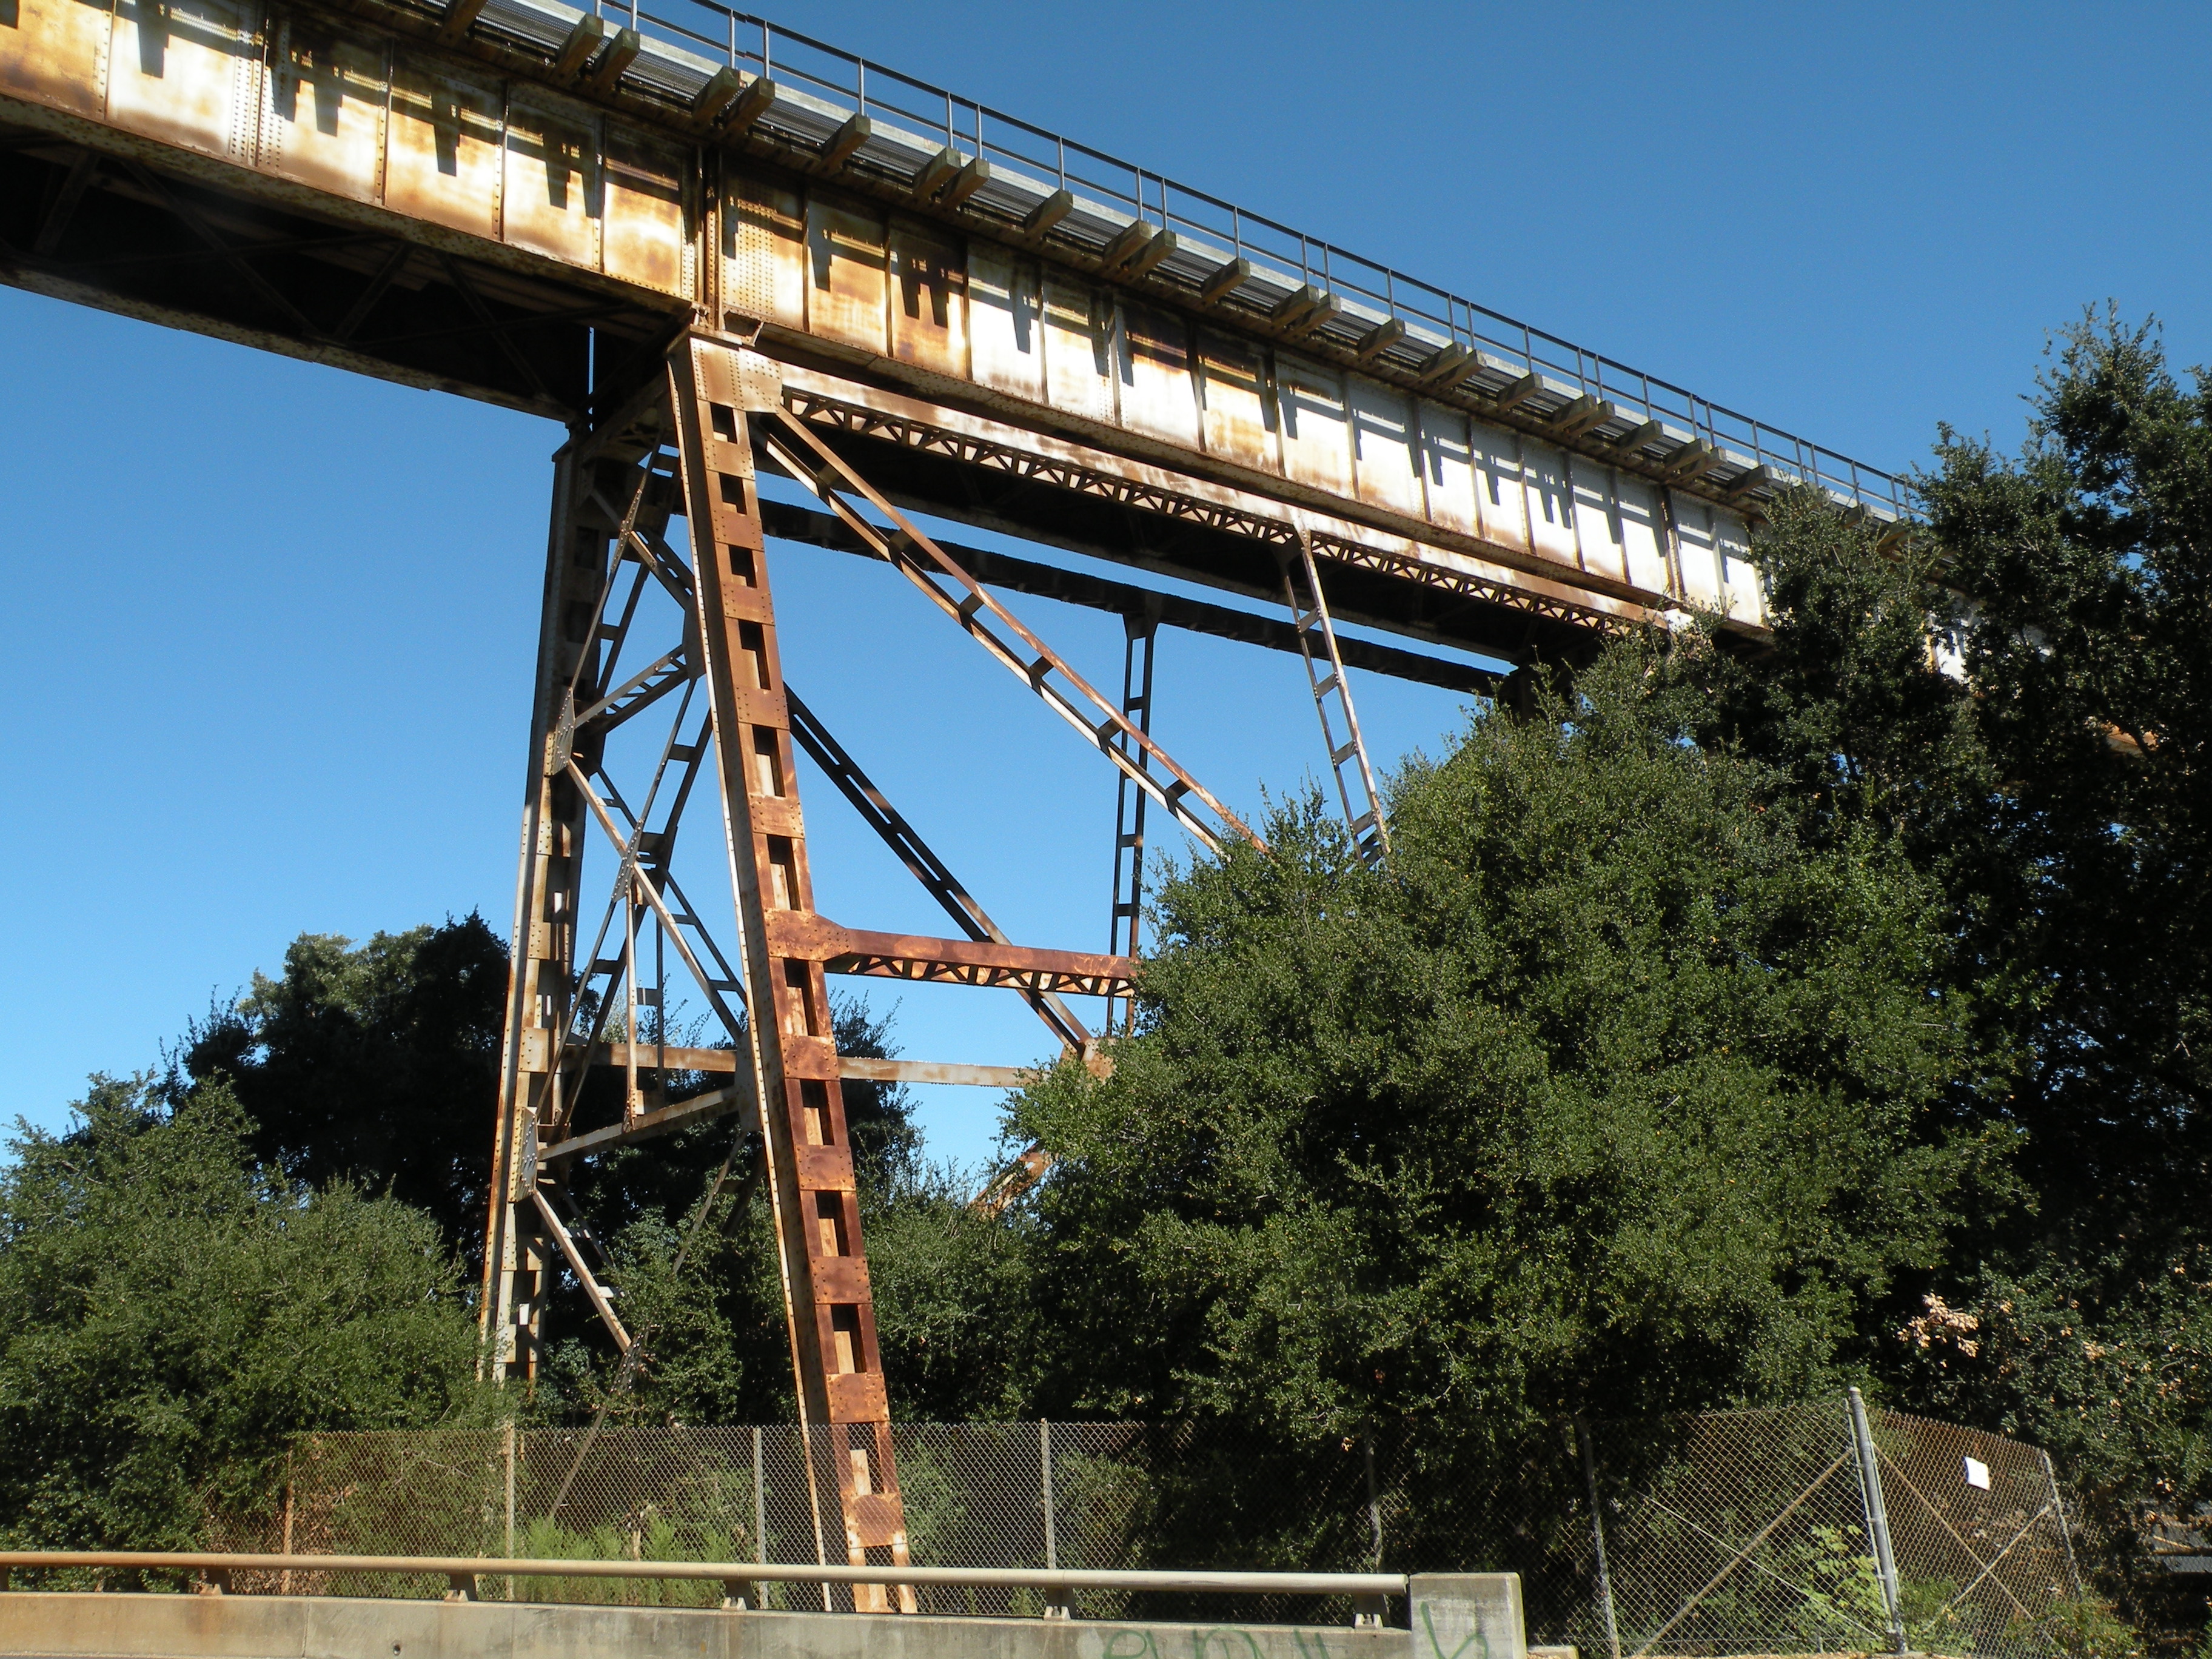 Martinez rail trestle work means Alhambra Avenue closures